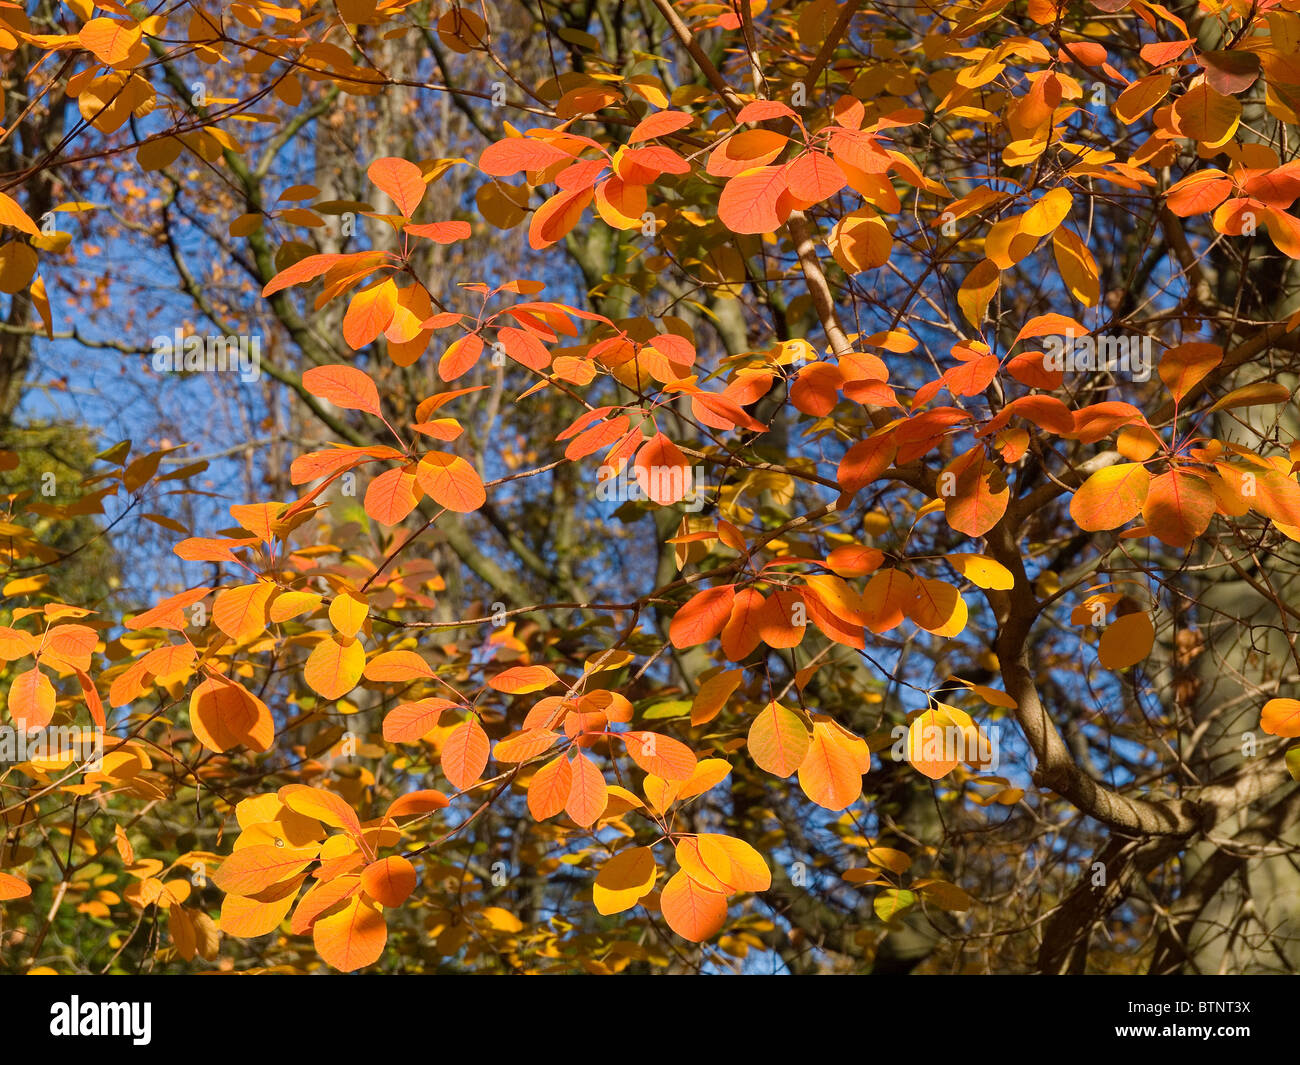 Autumn leaves of Cotinus coggygria or Venetian Sumach tree Stock Photo